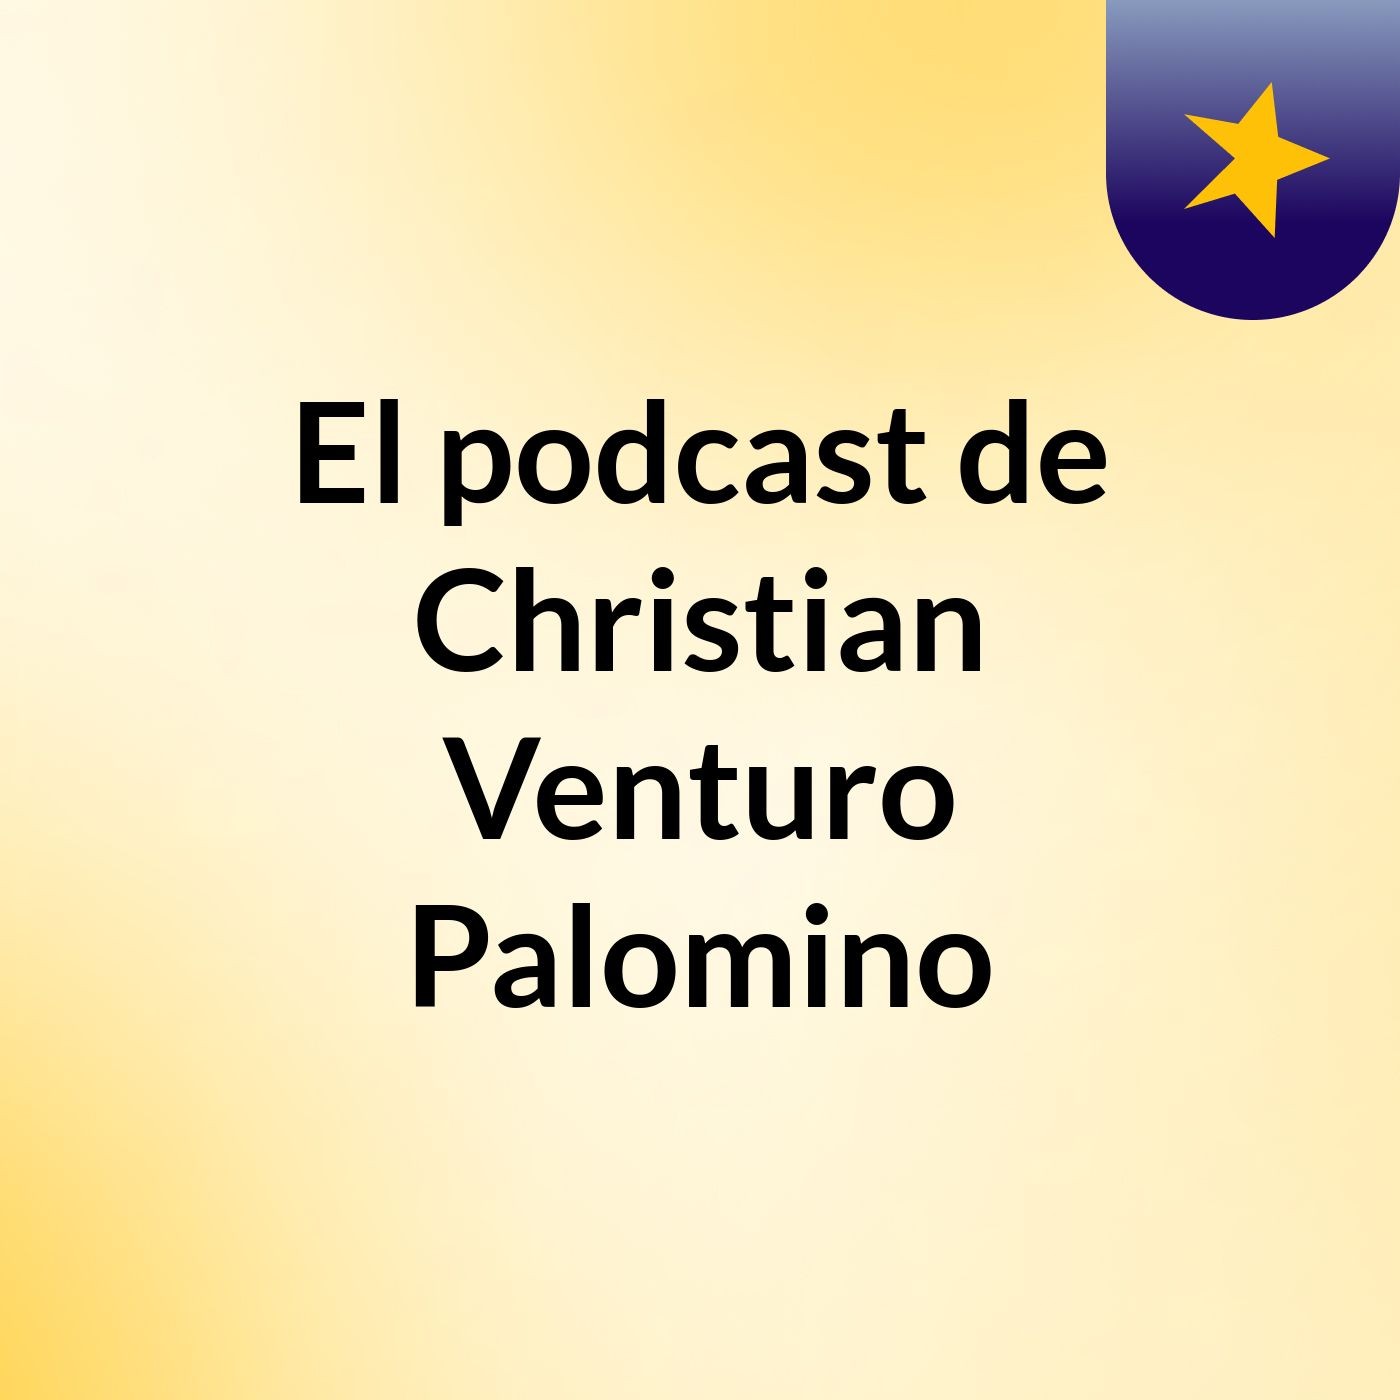 El podcast de Christian Venturo Palomino